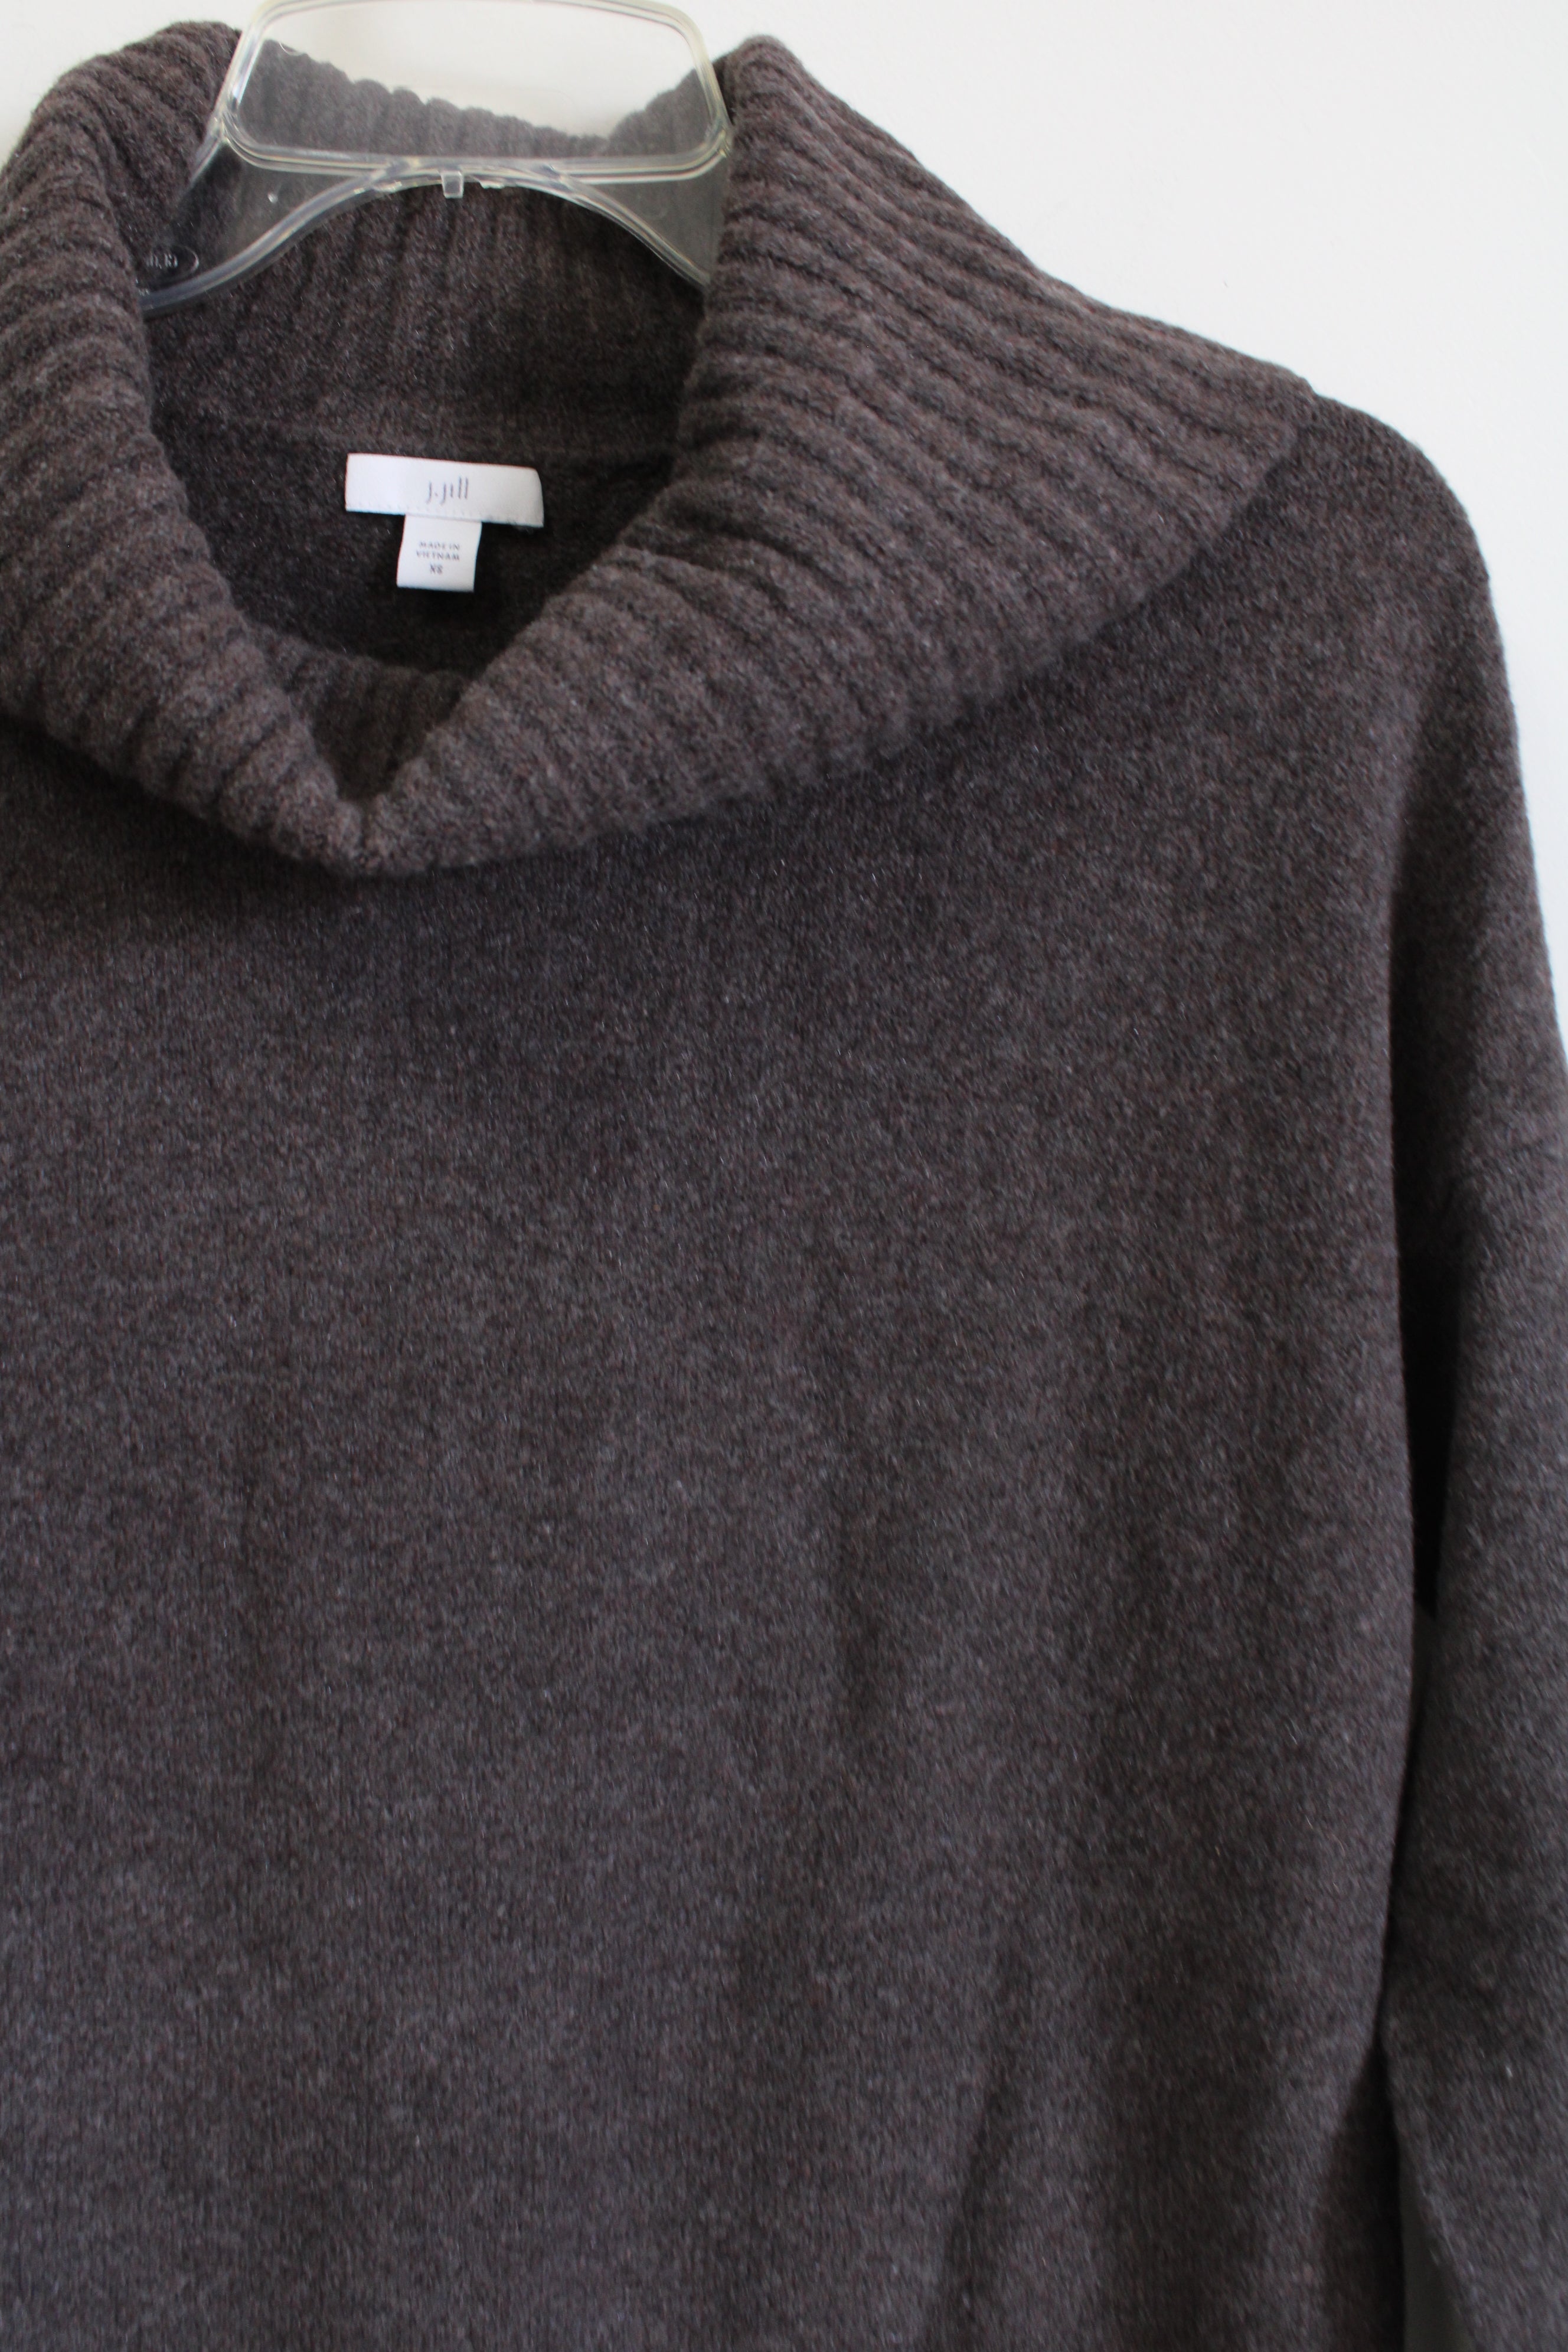 J.Jill Soft Gray Turtleneck Sweater | XS